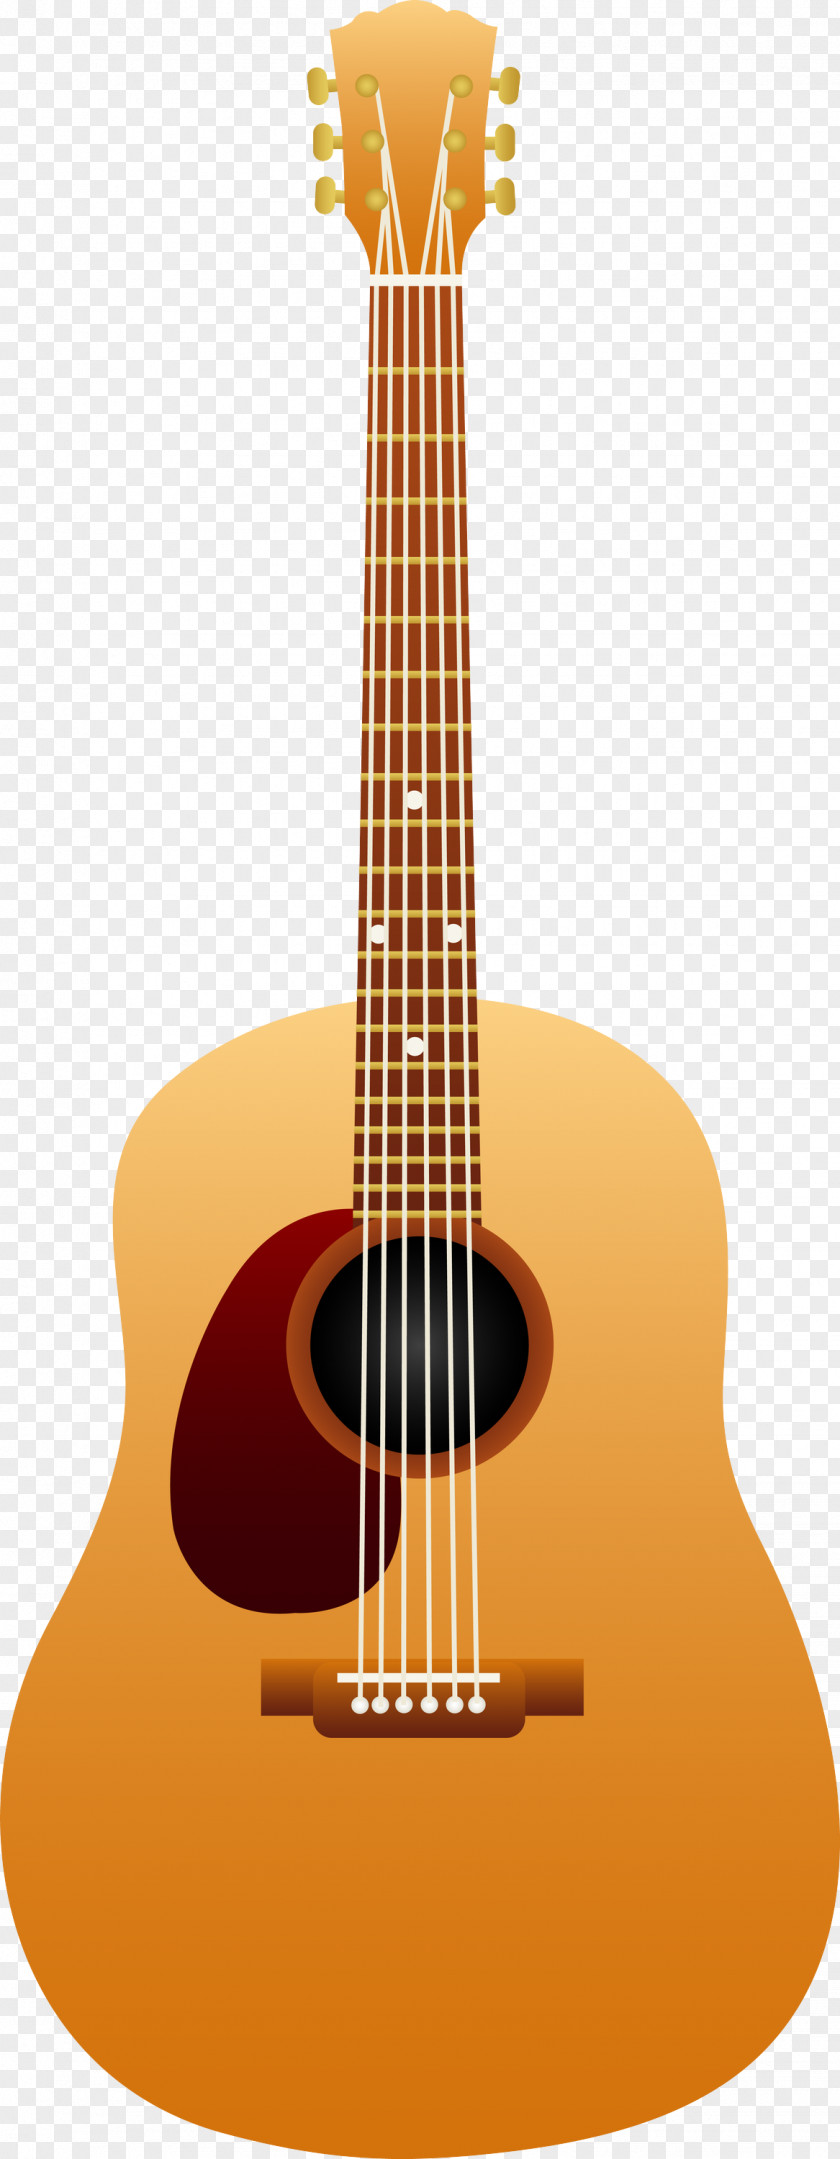 Jarana Jarocha Cuatro Guitar PNG